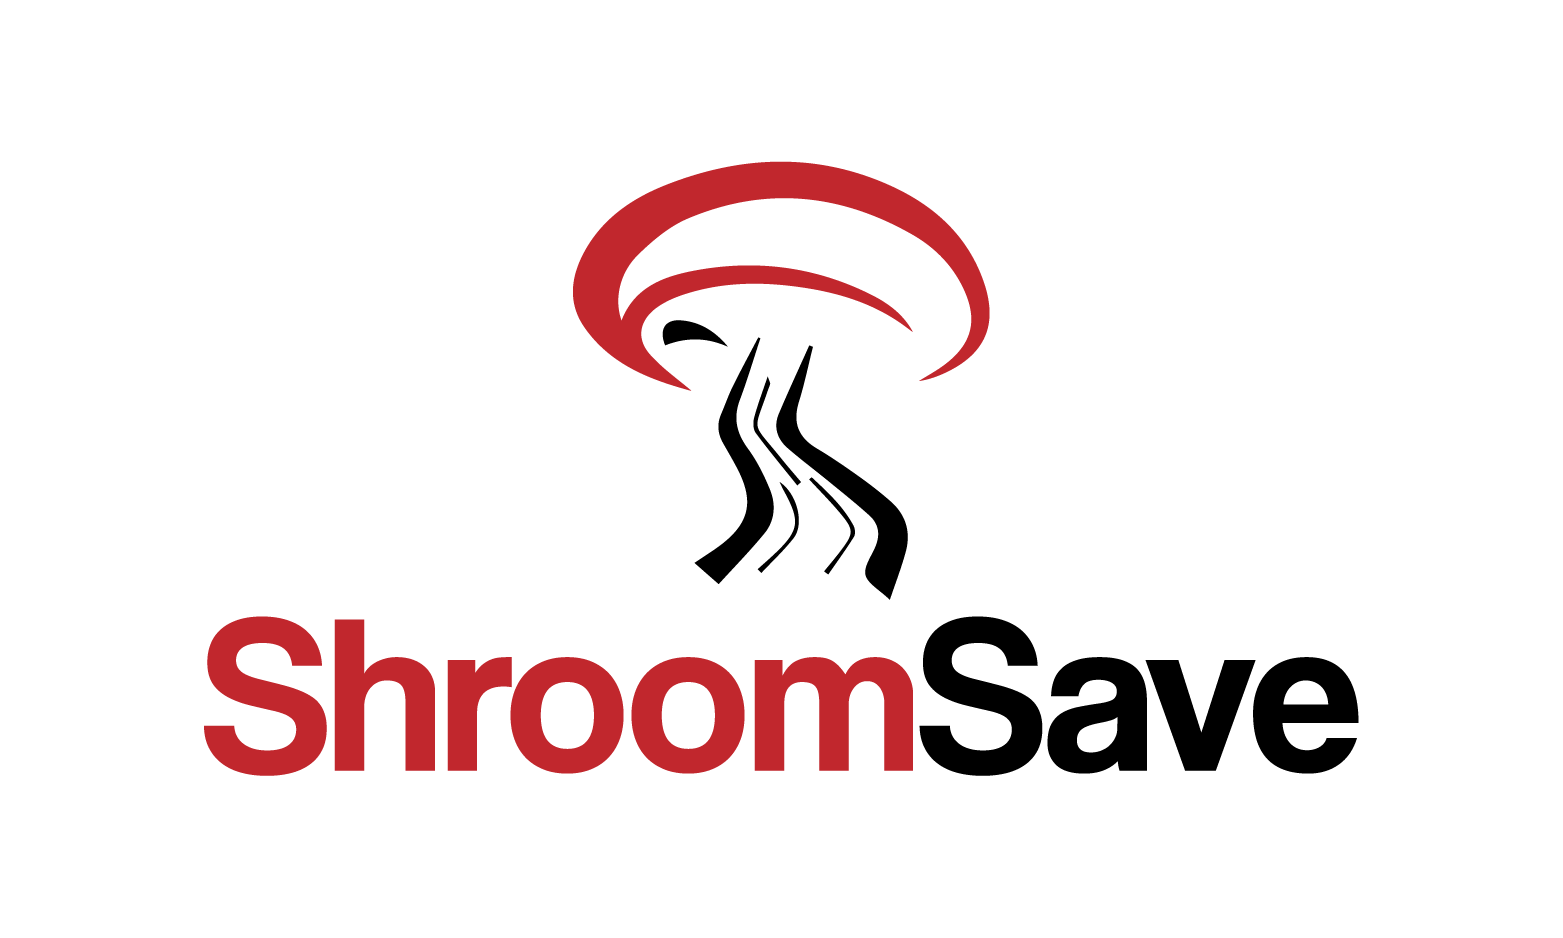 ShroomSave.com - Creative brandable domain for sale